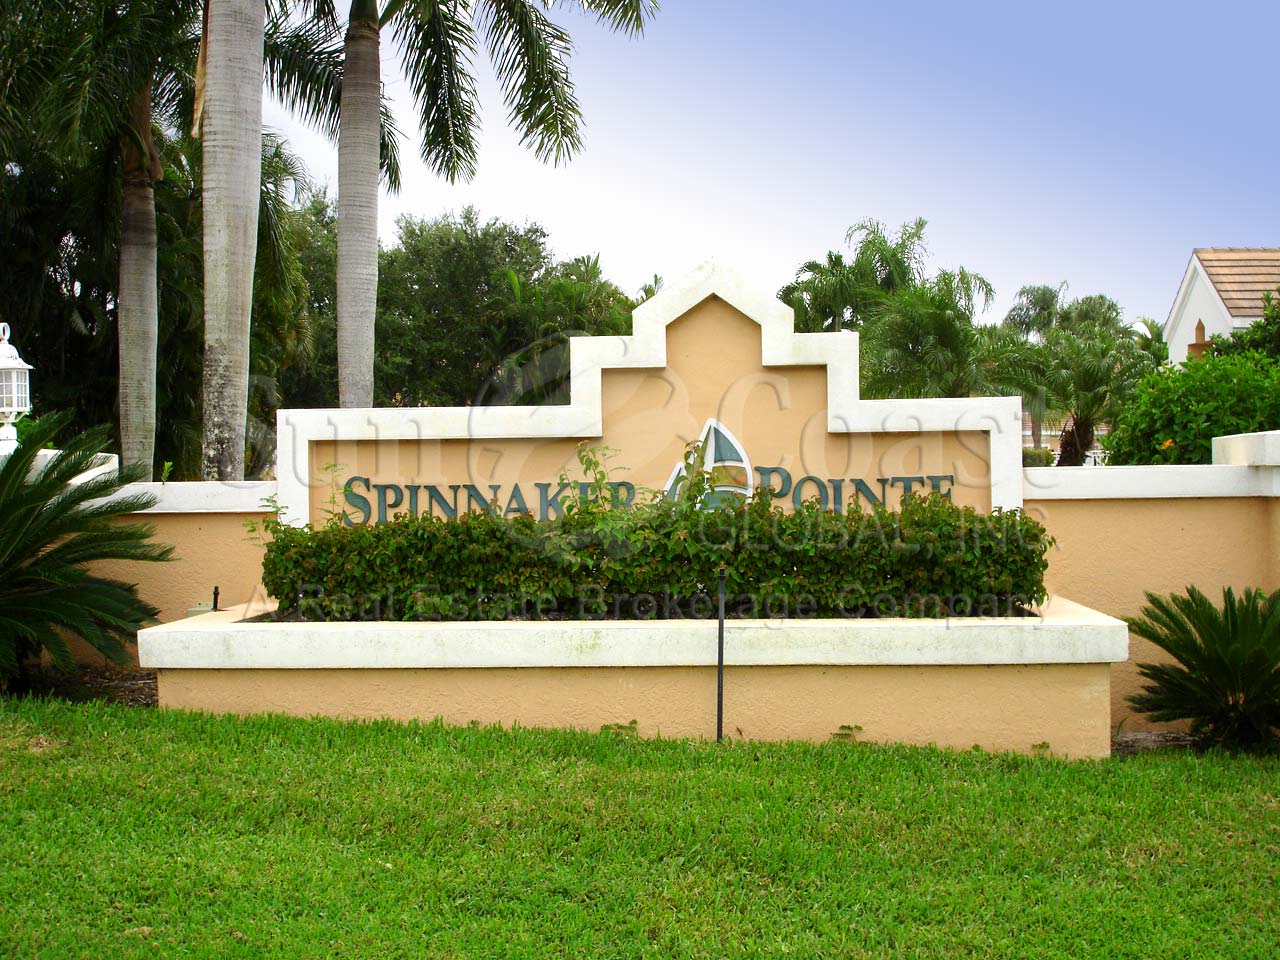 Spinnaker Pointe signage